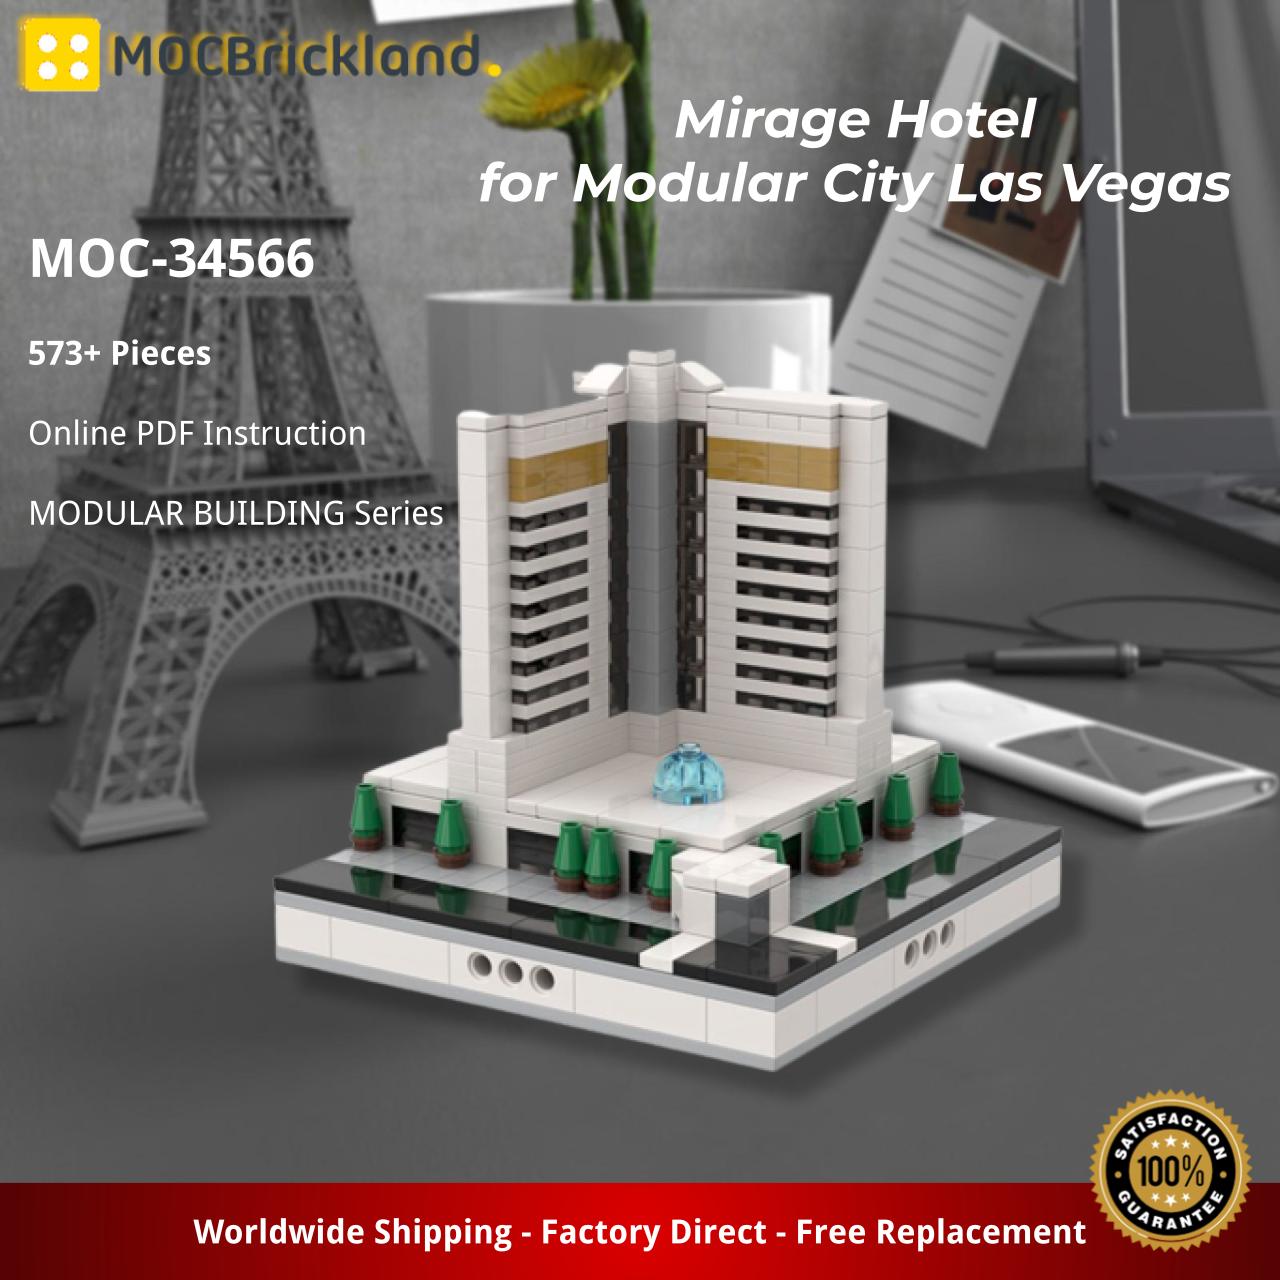 MOCBRICKLAND MOC-34554 MGM Grand Hotel for Modular City Las Vegas